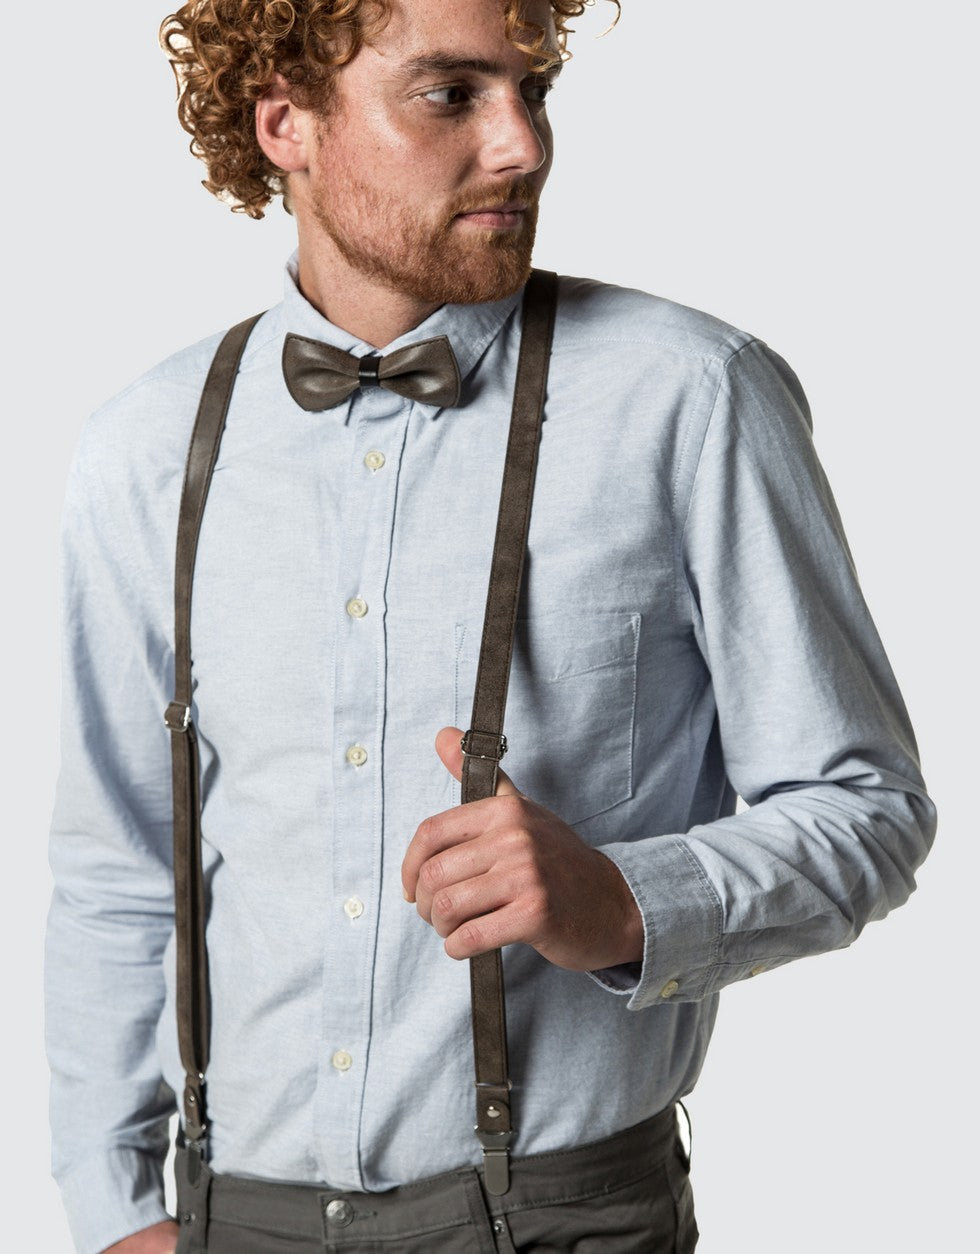 Luster Y-Back Suspenders Bow Tie Set, 52% OFF